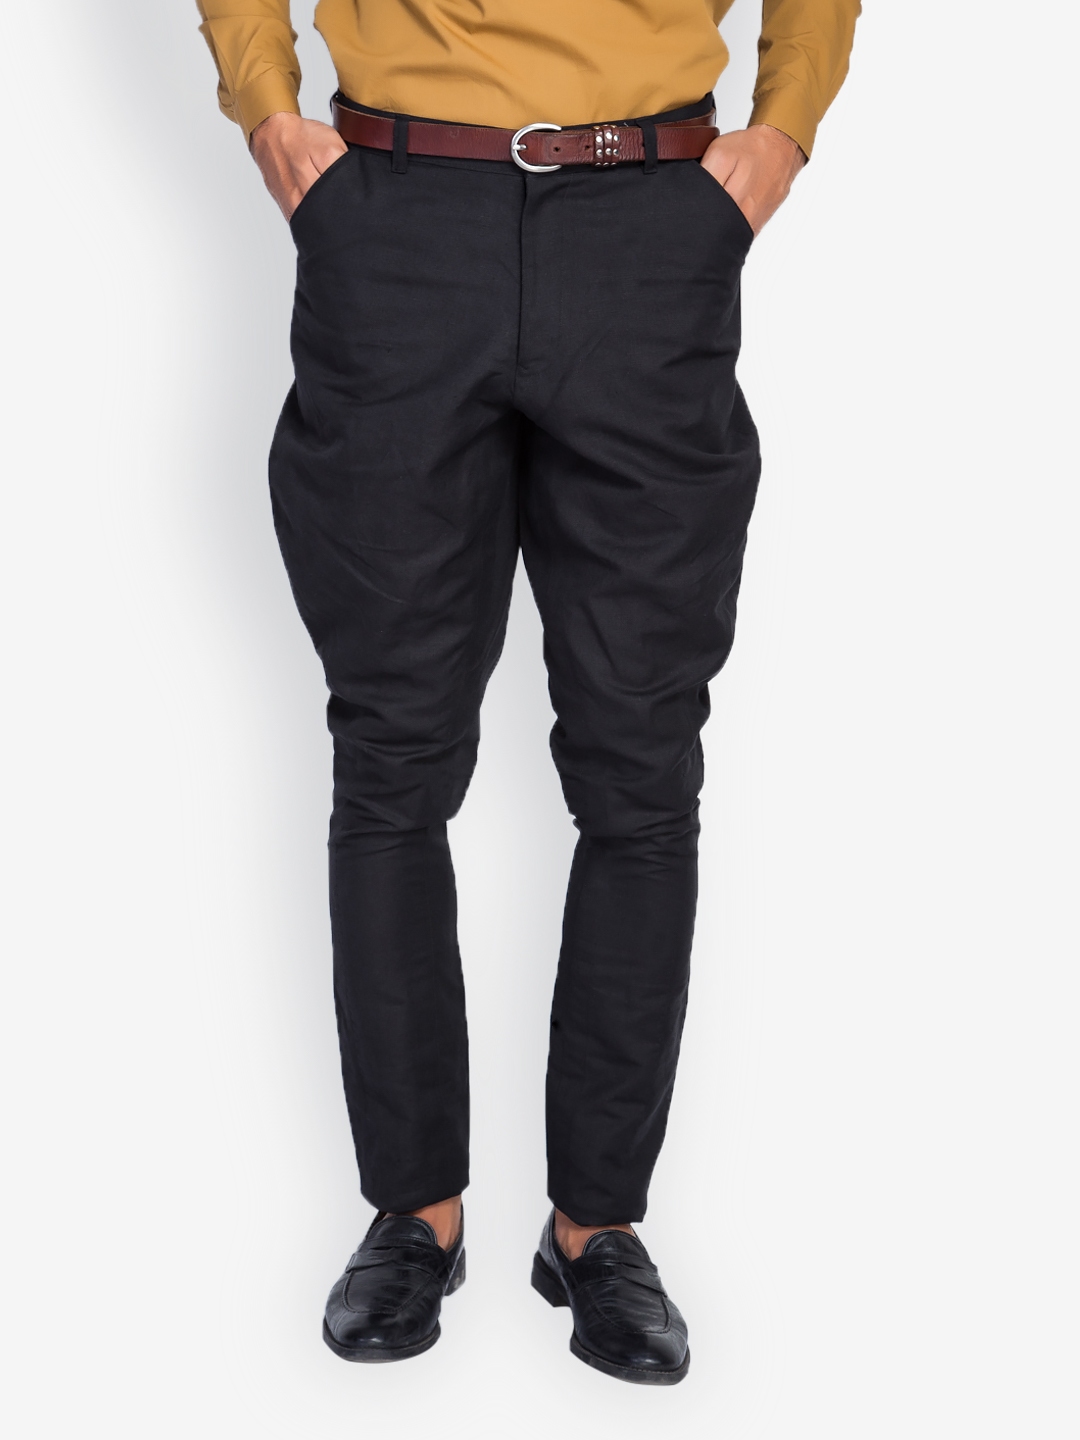 Black jodhpur trousers by Dhatu Design Studio  The Secret Label